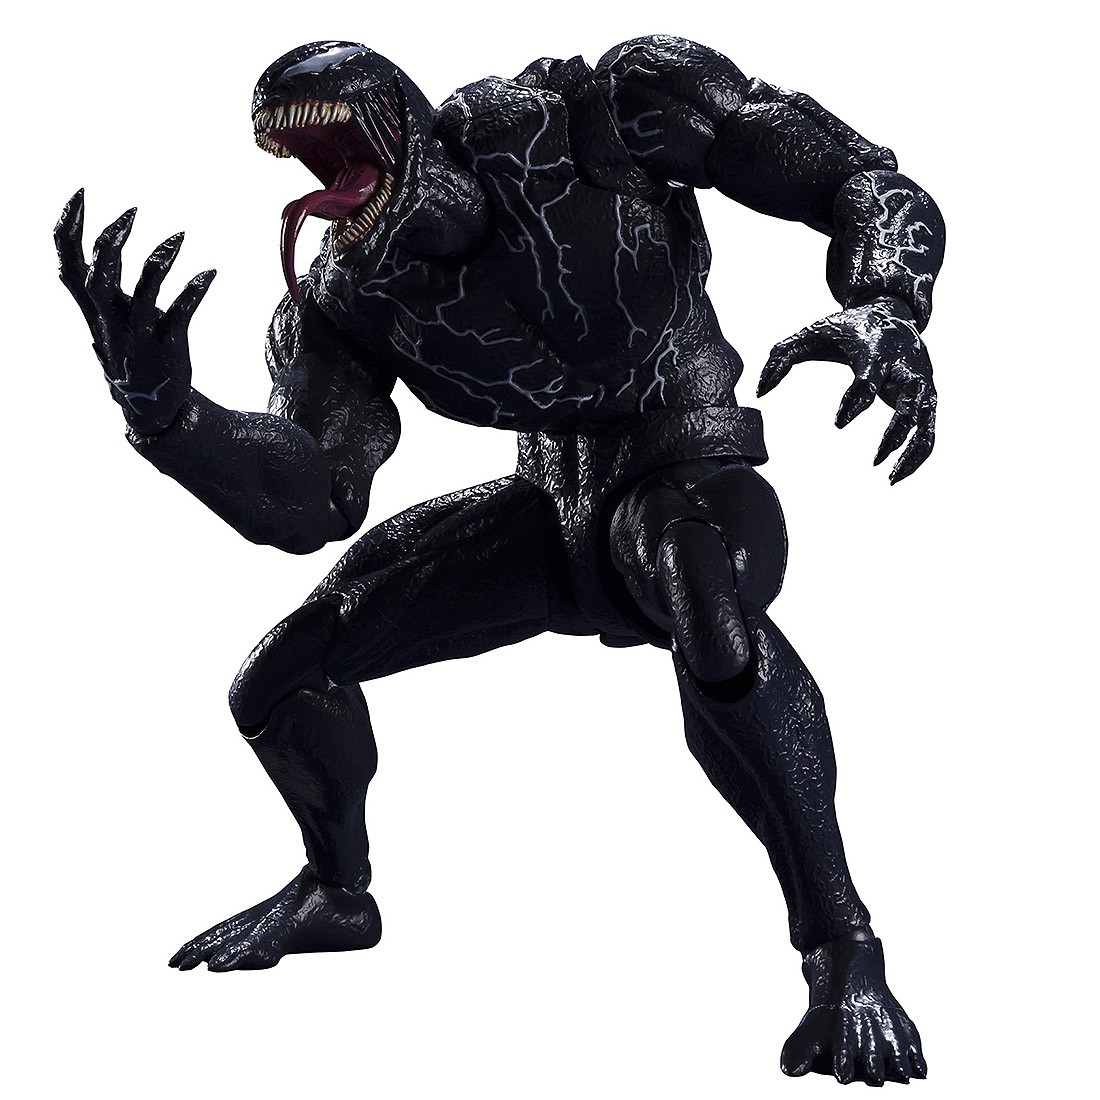 PREORDER - Bandai S.H.Figuarts Venom Let There Be Carnage Venom Figure (black)